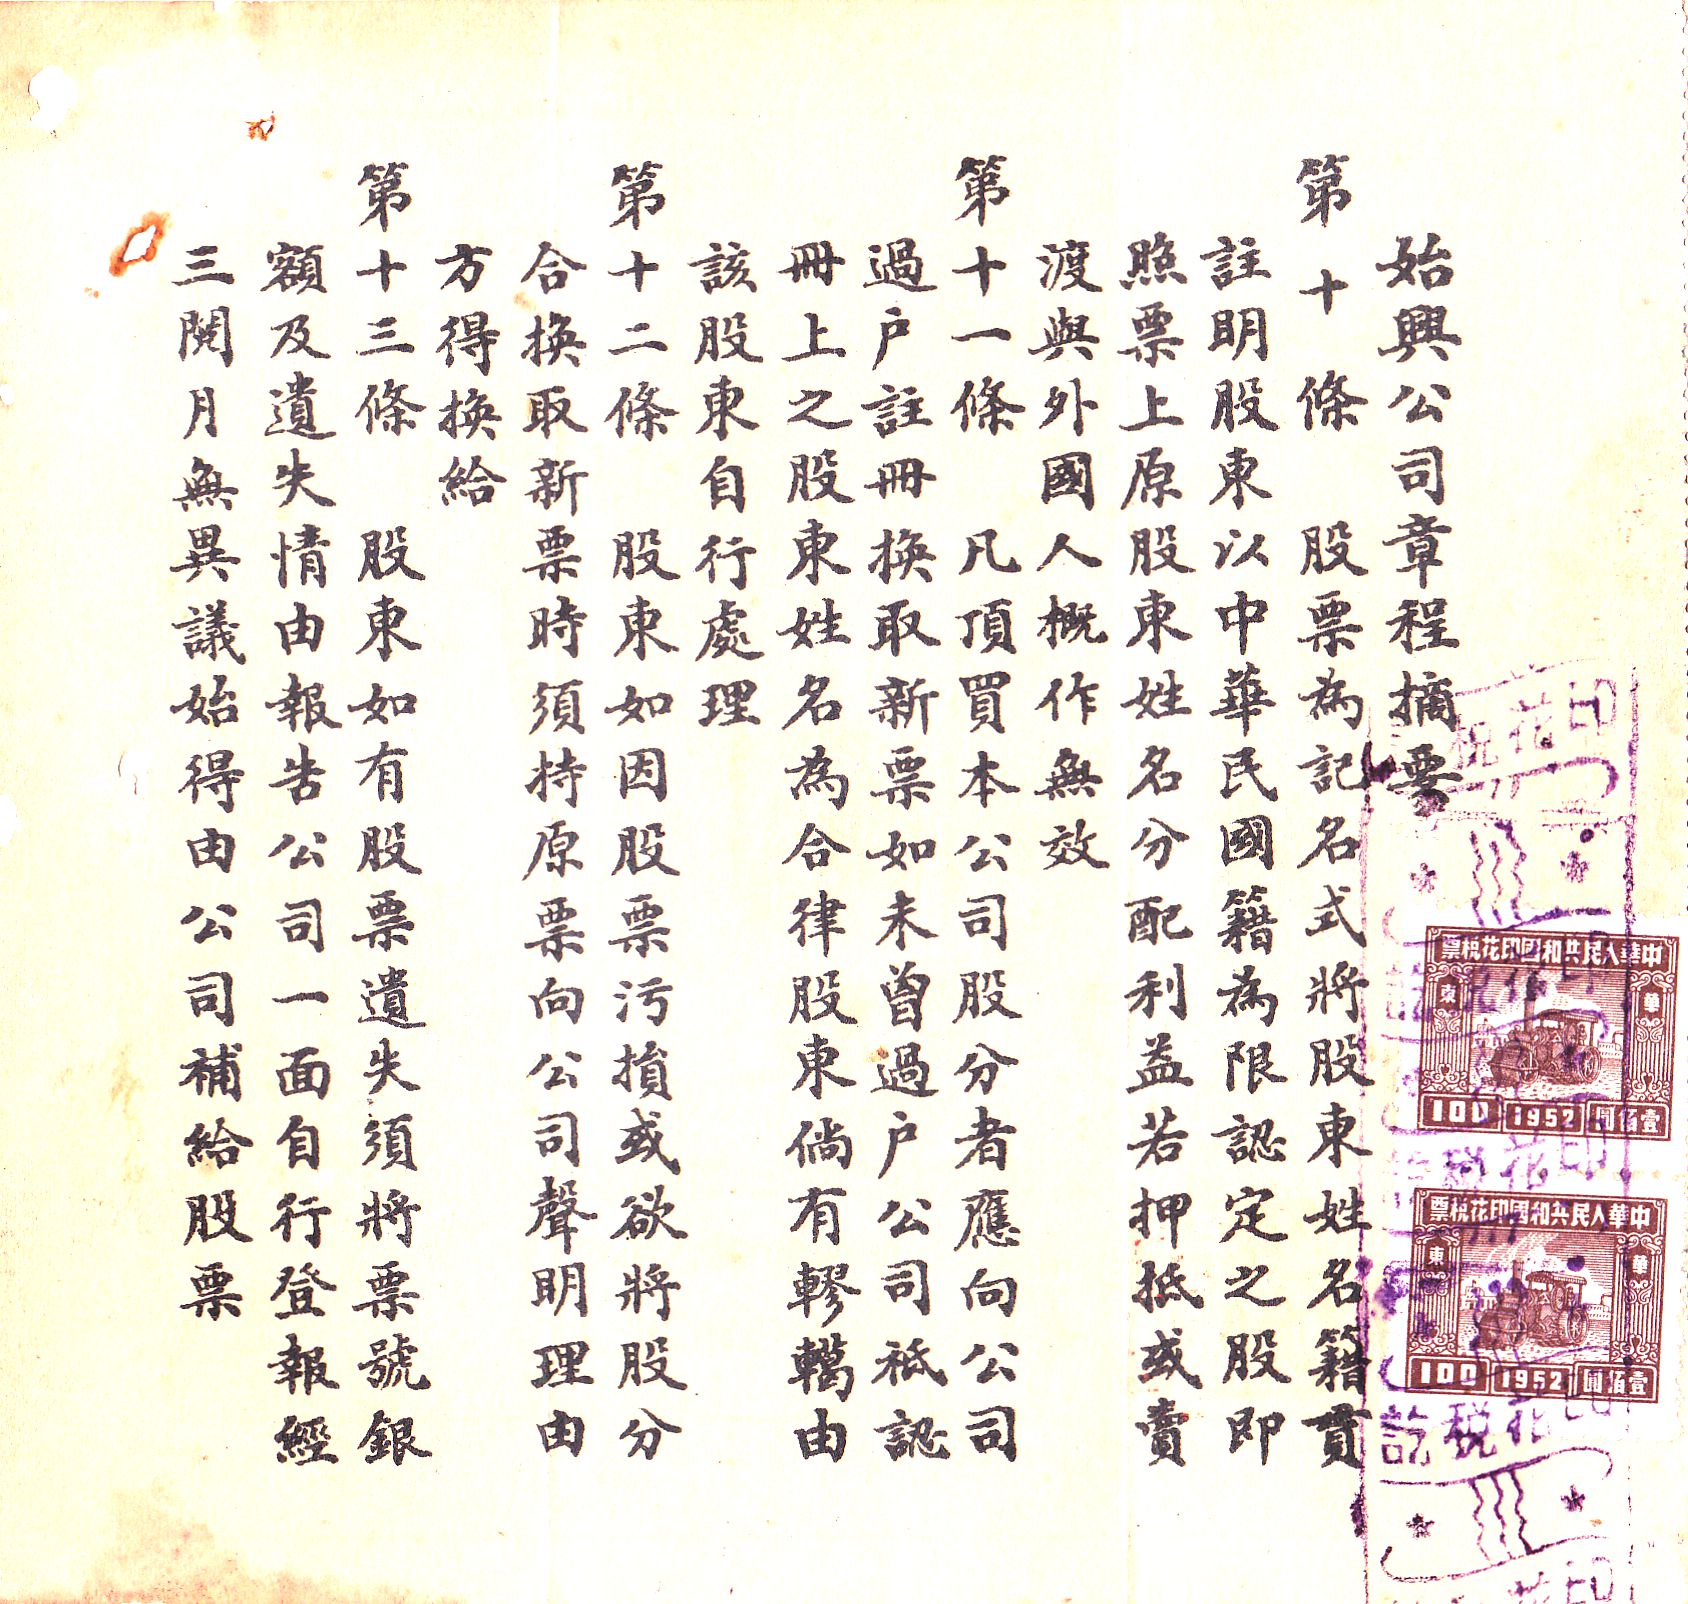 S0190, Tse-Hsing Motor Car Co., Stock Certificate 1 Share, China 1923